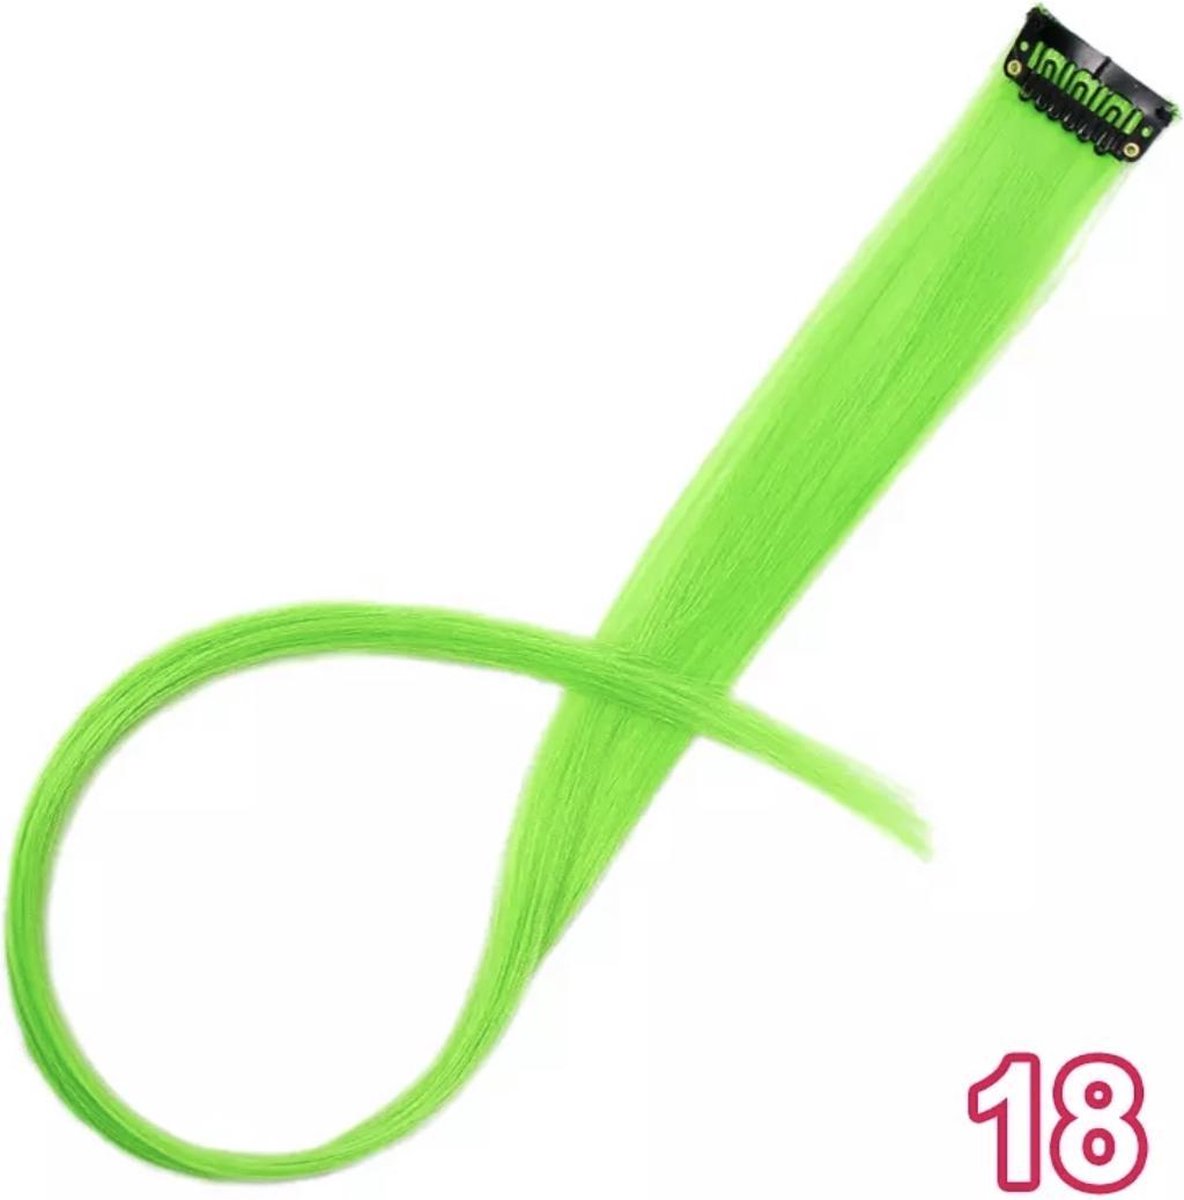 Clip in haar extension groen - clip in hair extension green - nep haar plukje- gekleurd haar plukje - clip in haar kleur - nep haar kind plukje